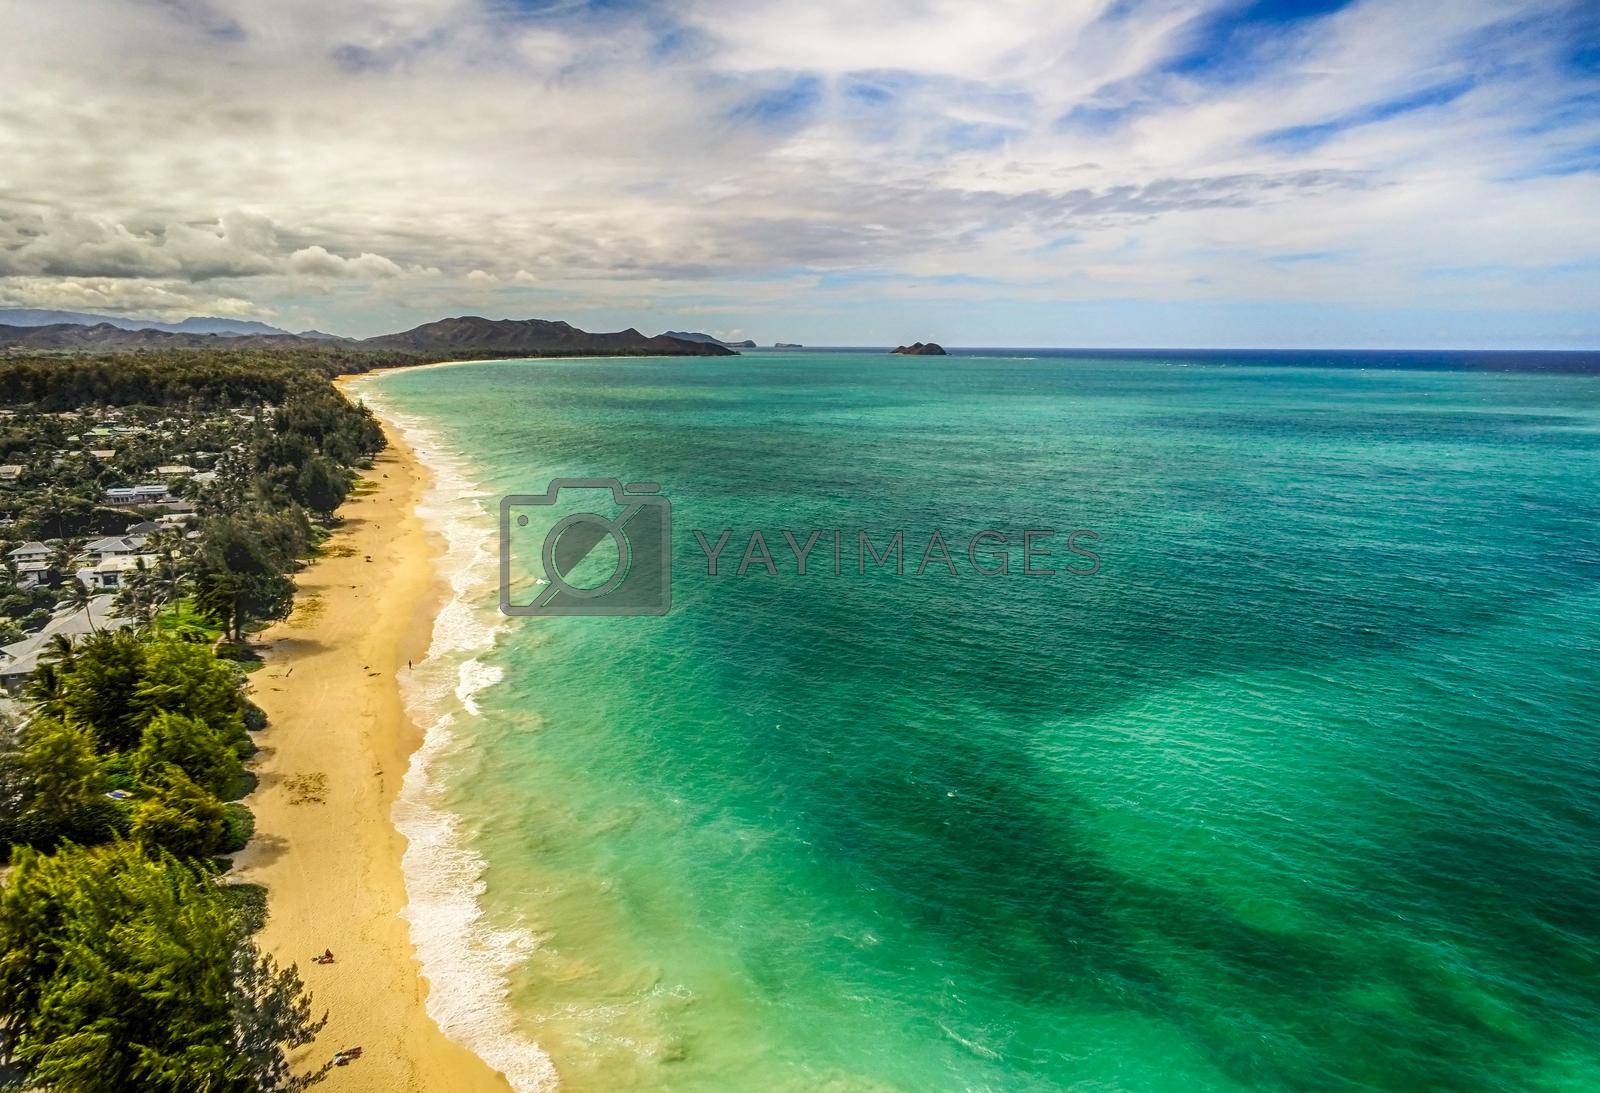 Royalty free image of waimanalo beach oahu hawaii vacation spot by digidreamgrafix